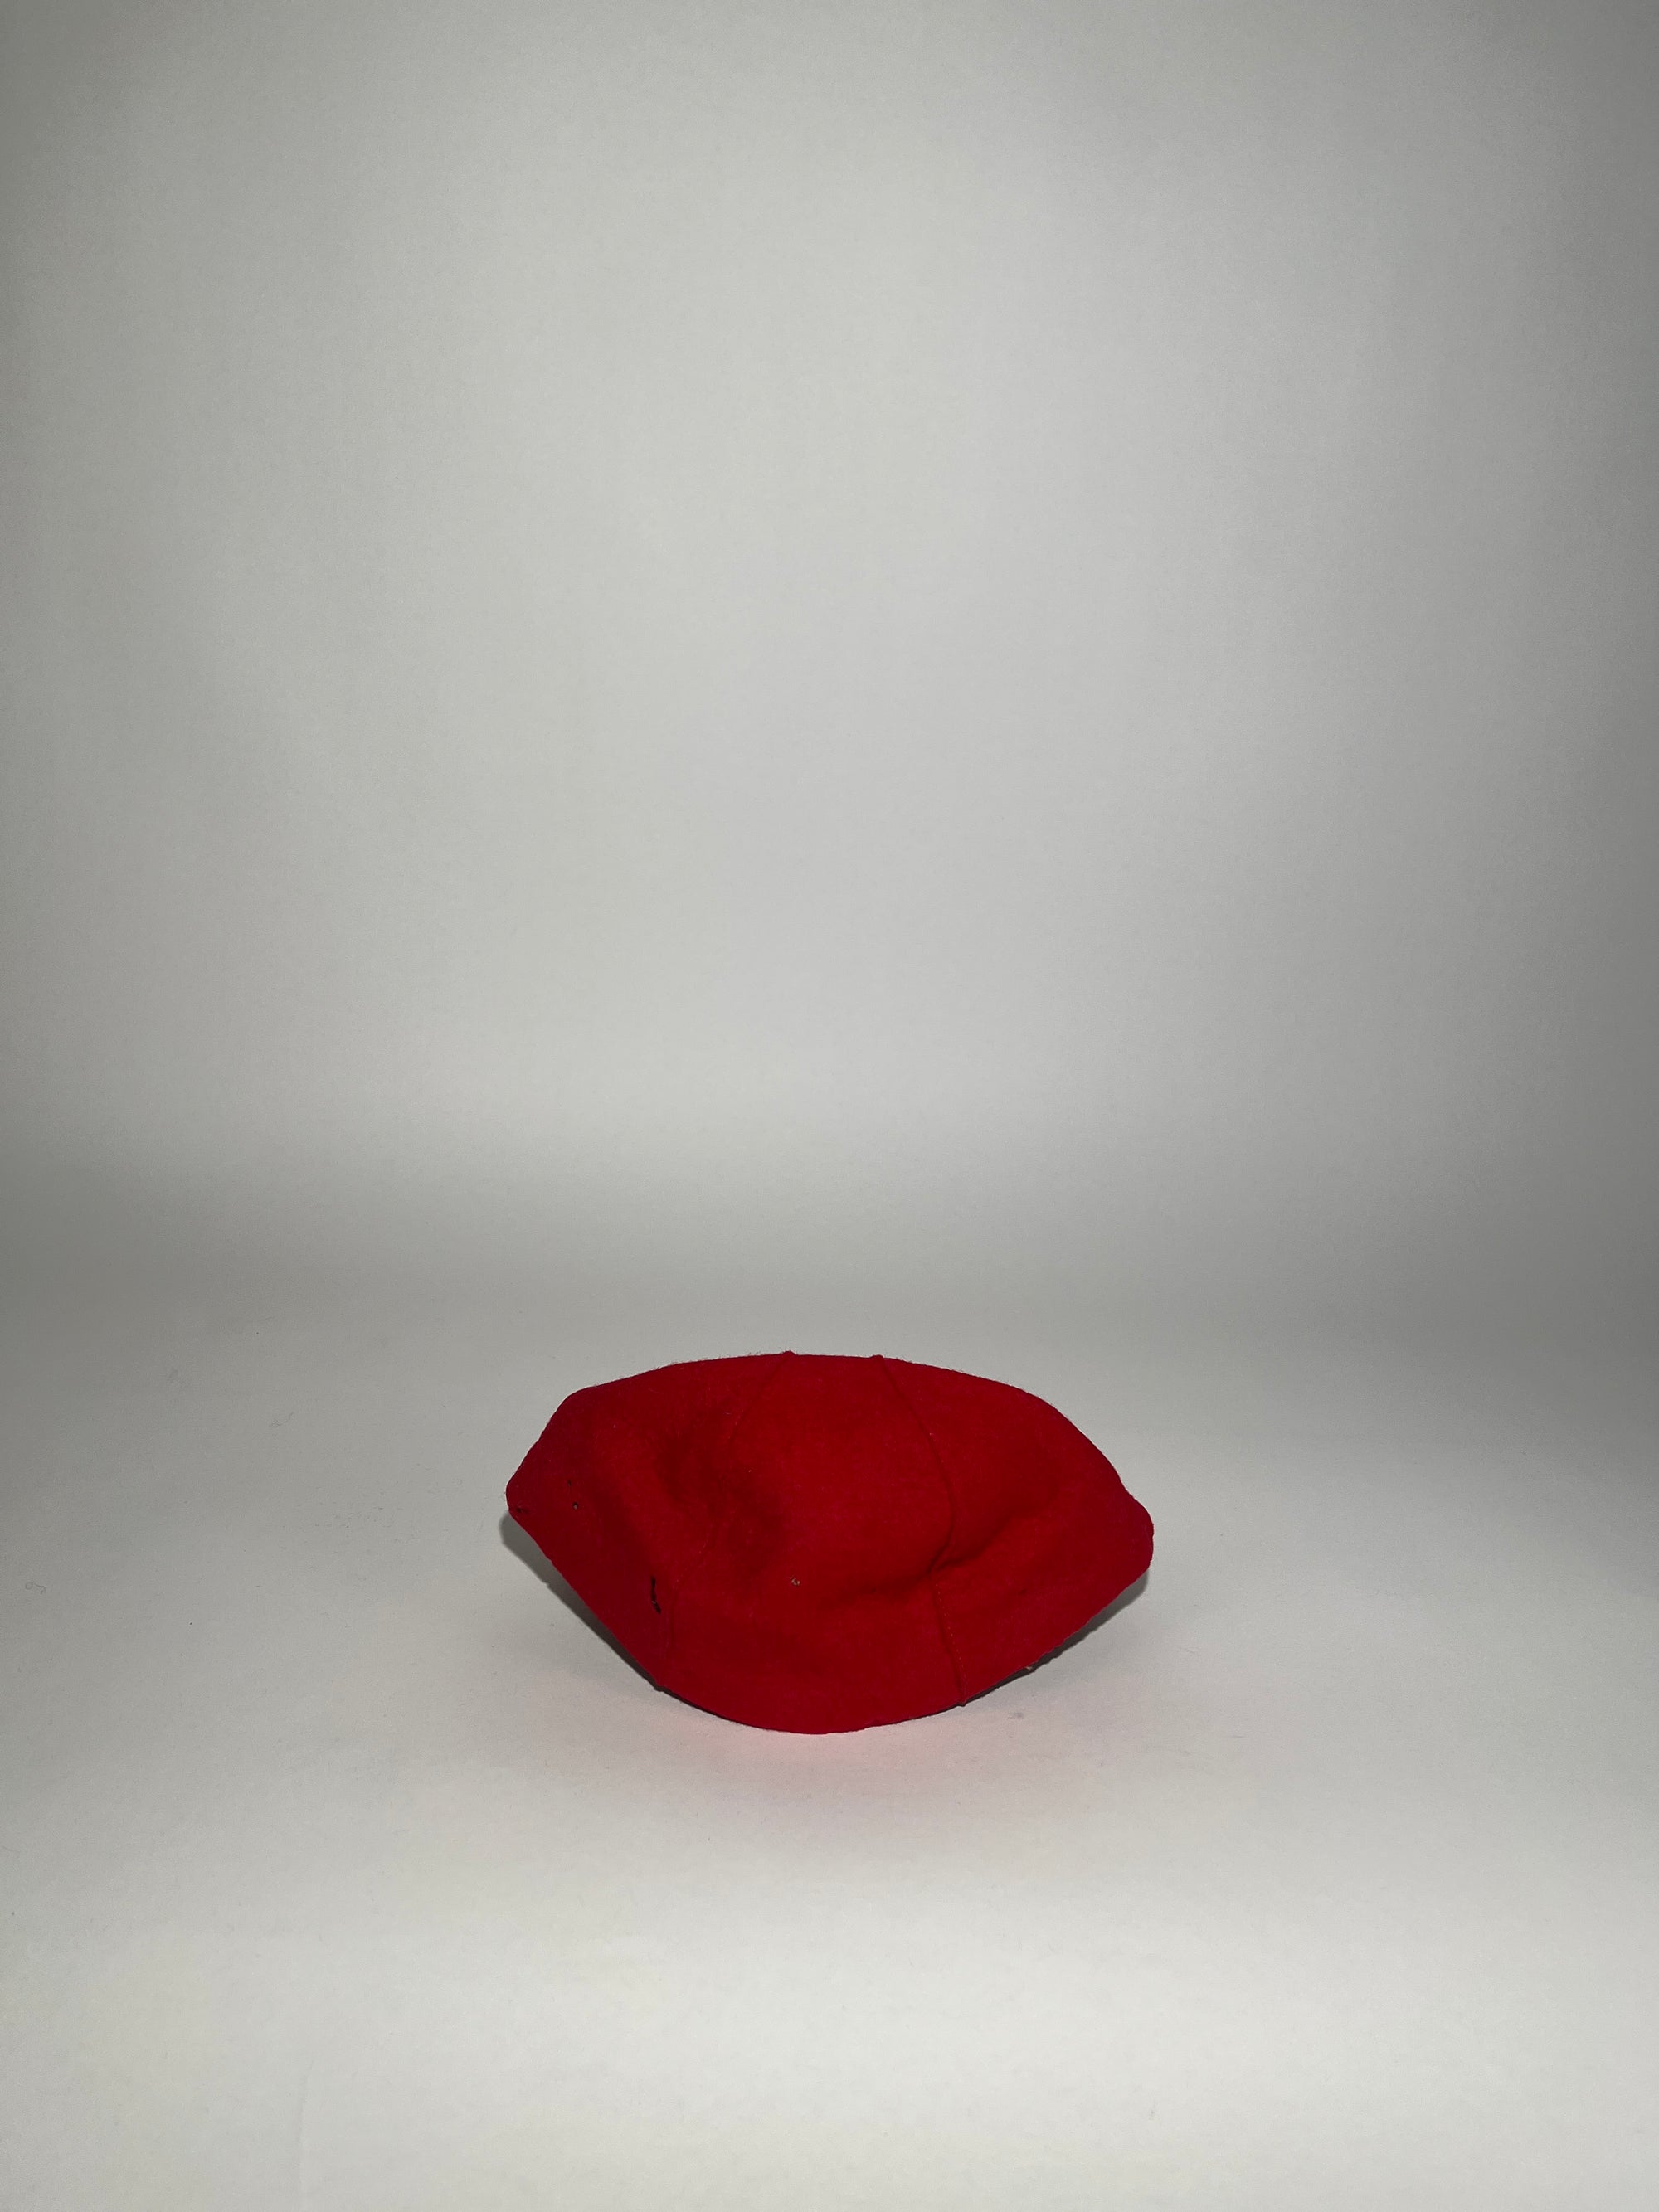 Red "68" Baseball Hat